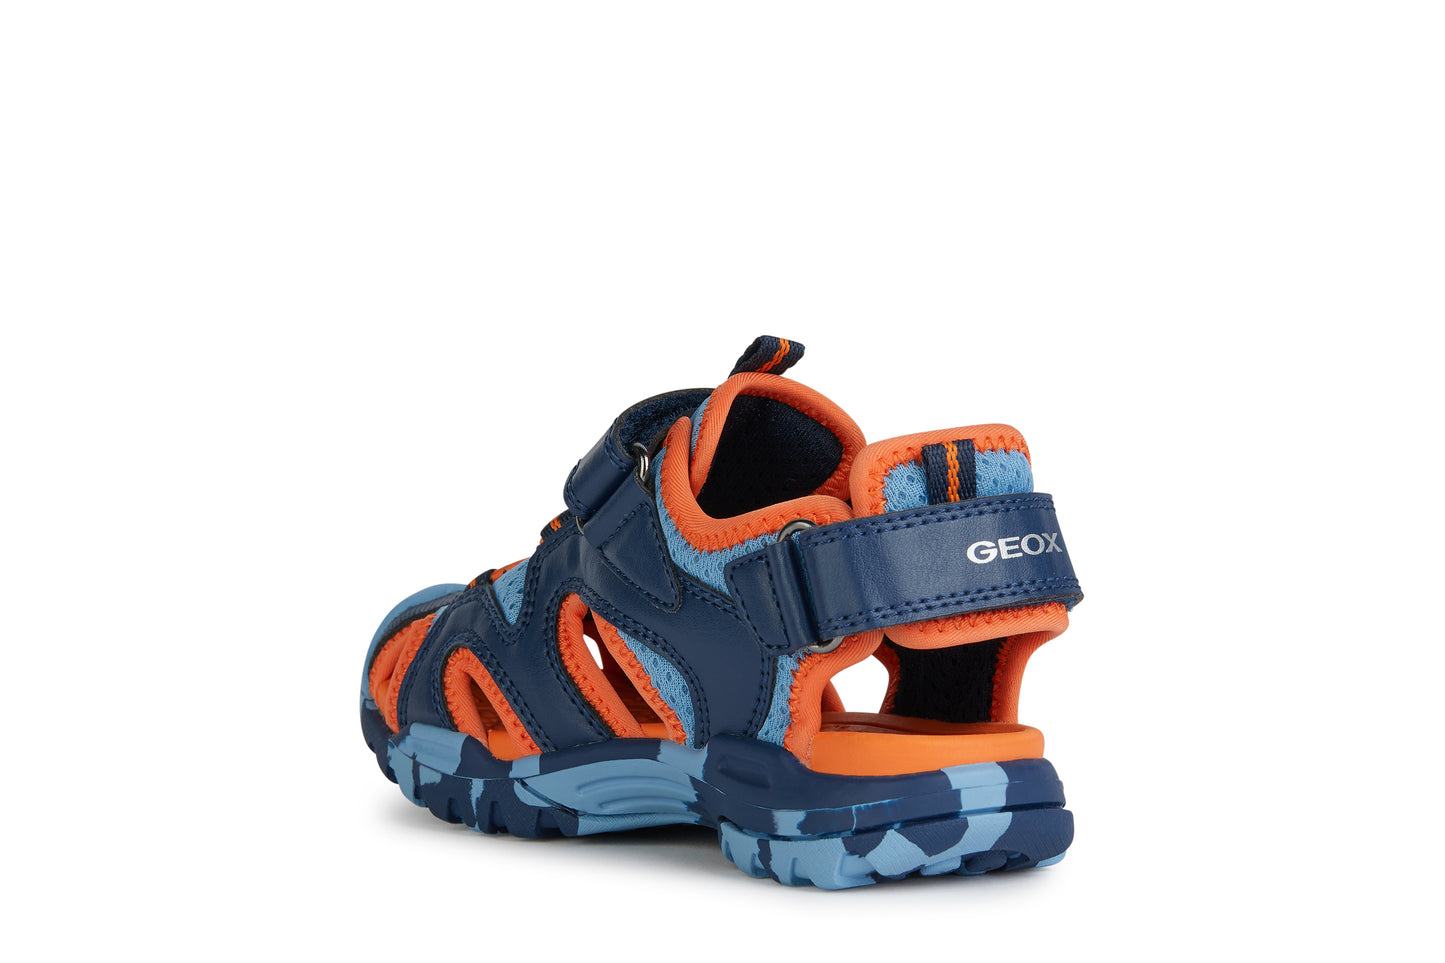 Borealis Boys Blue/Orange Water Friendly Sandal